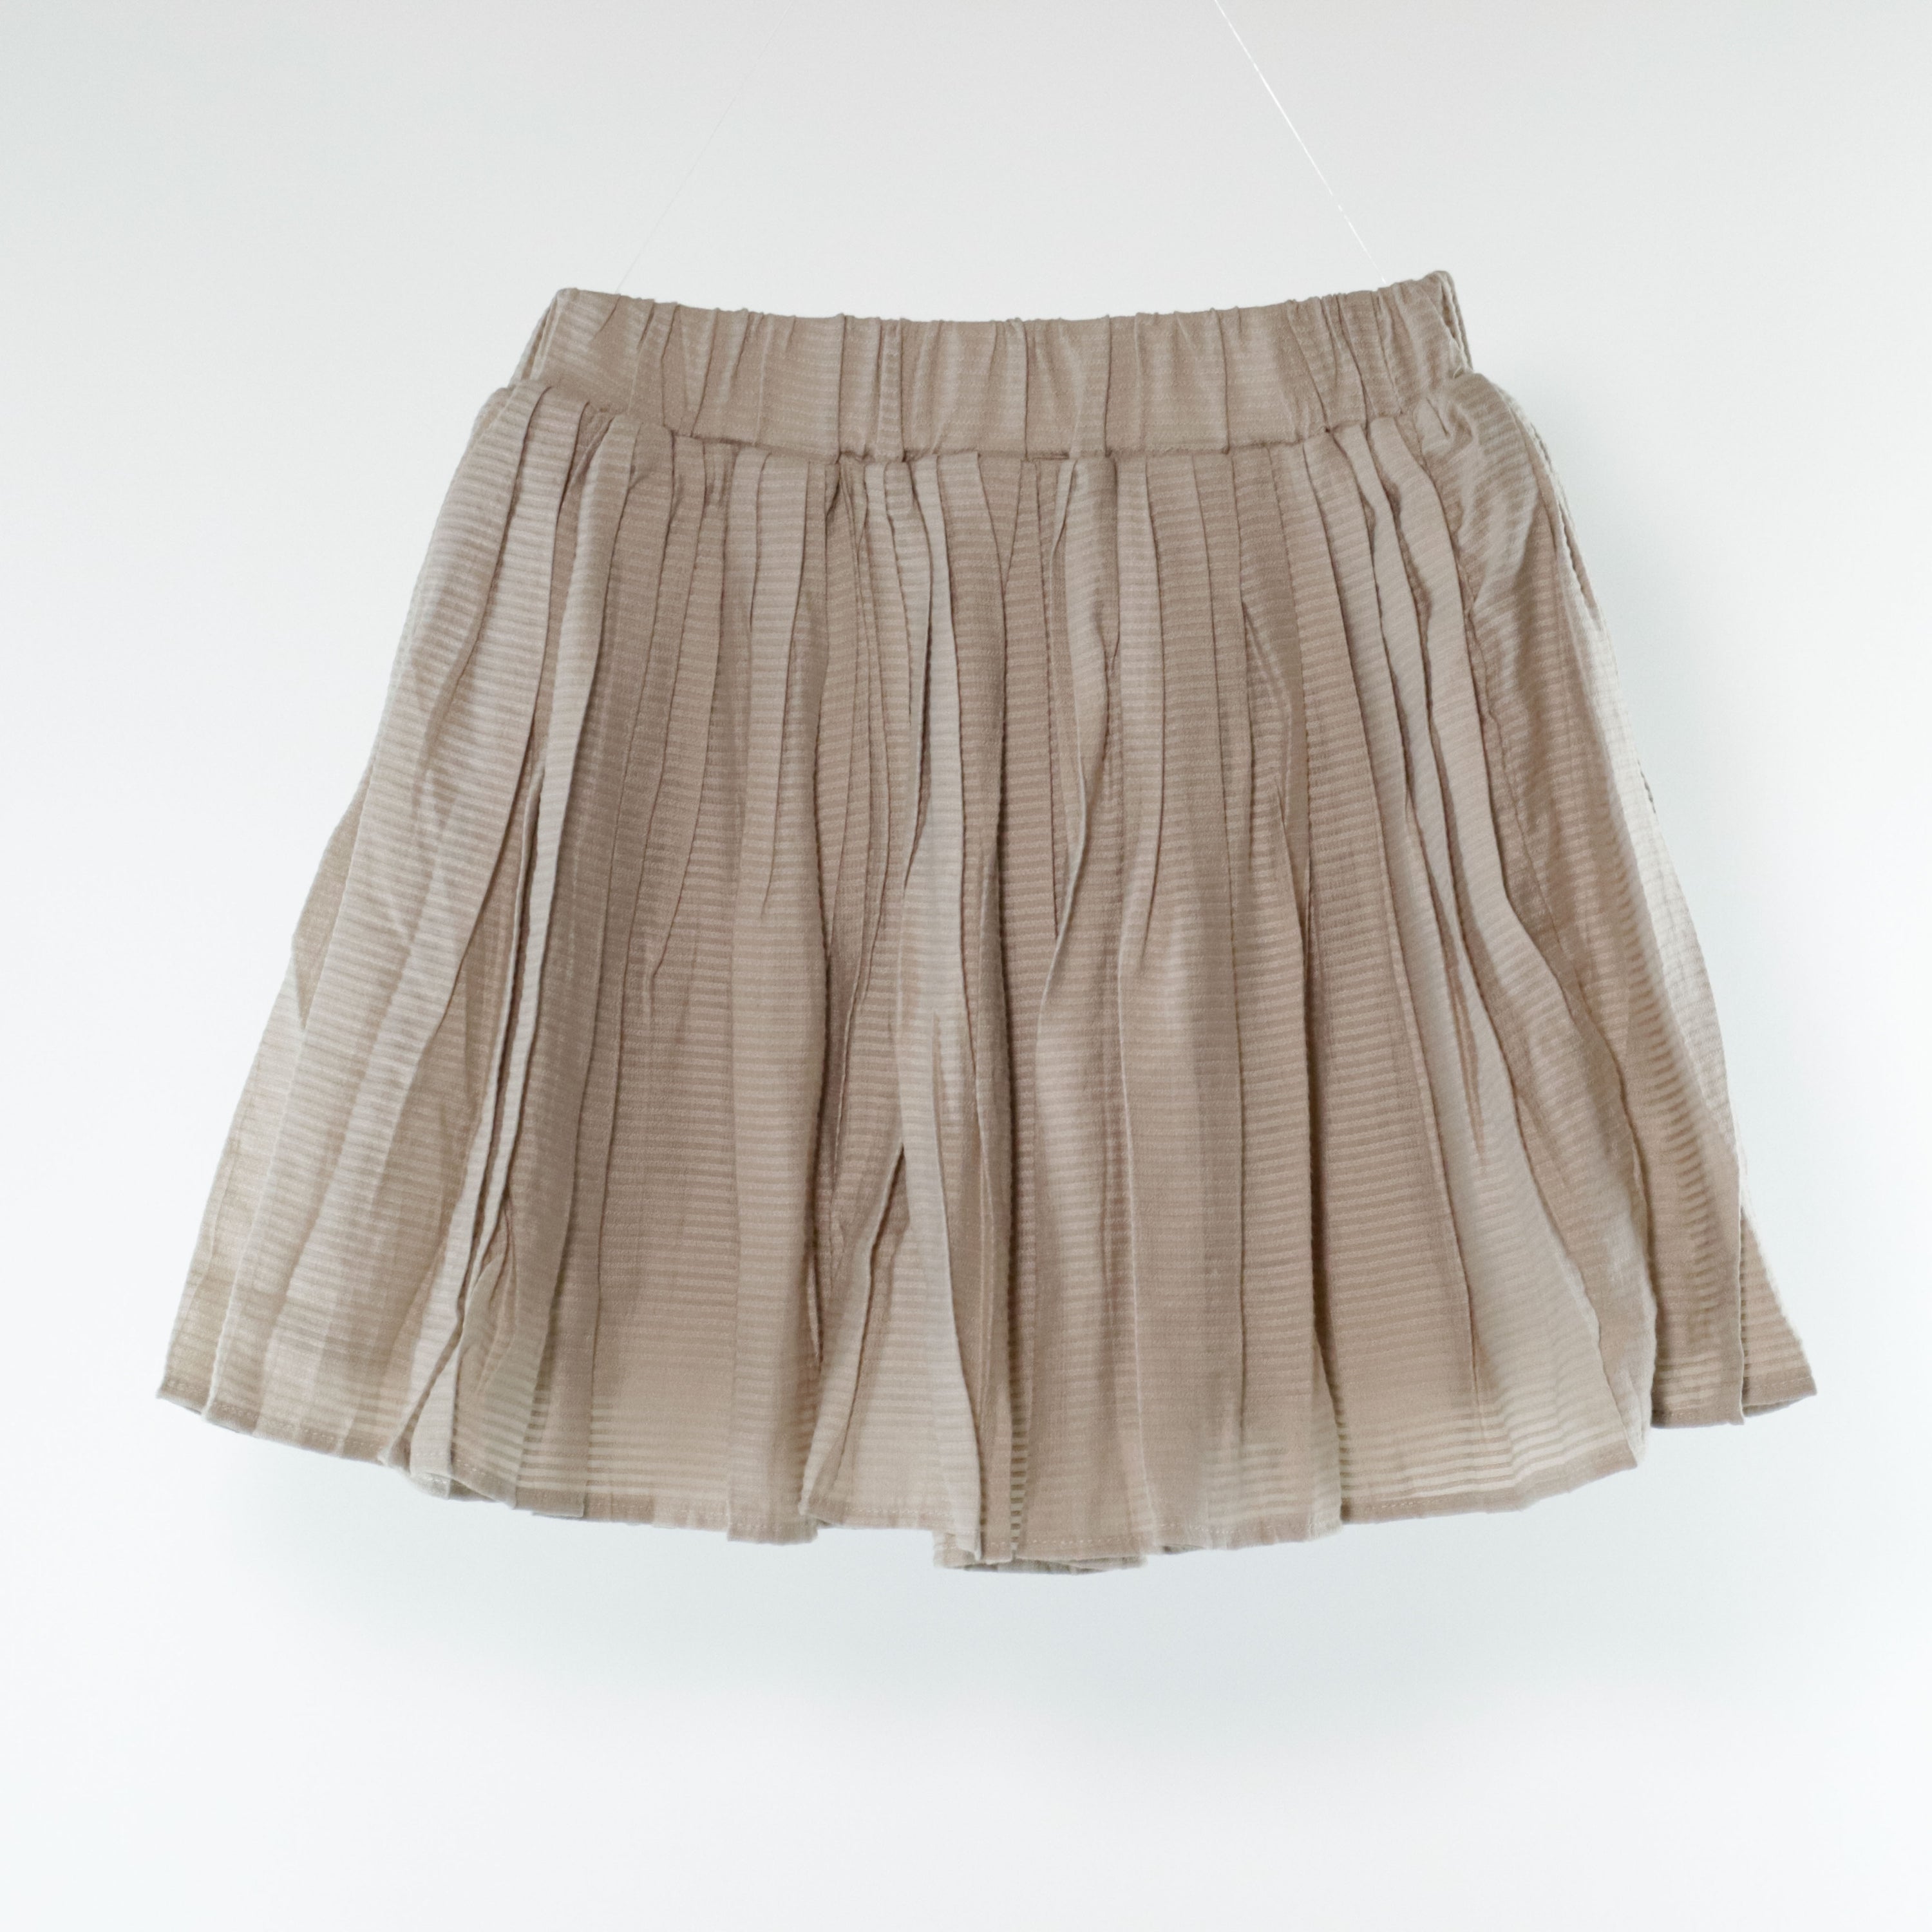 MZT Pleated Skirts (Ready Stock)